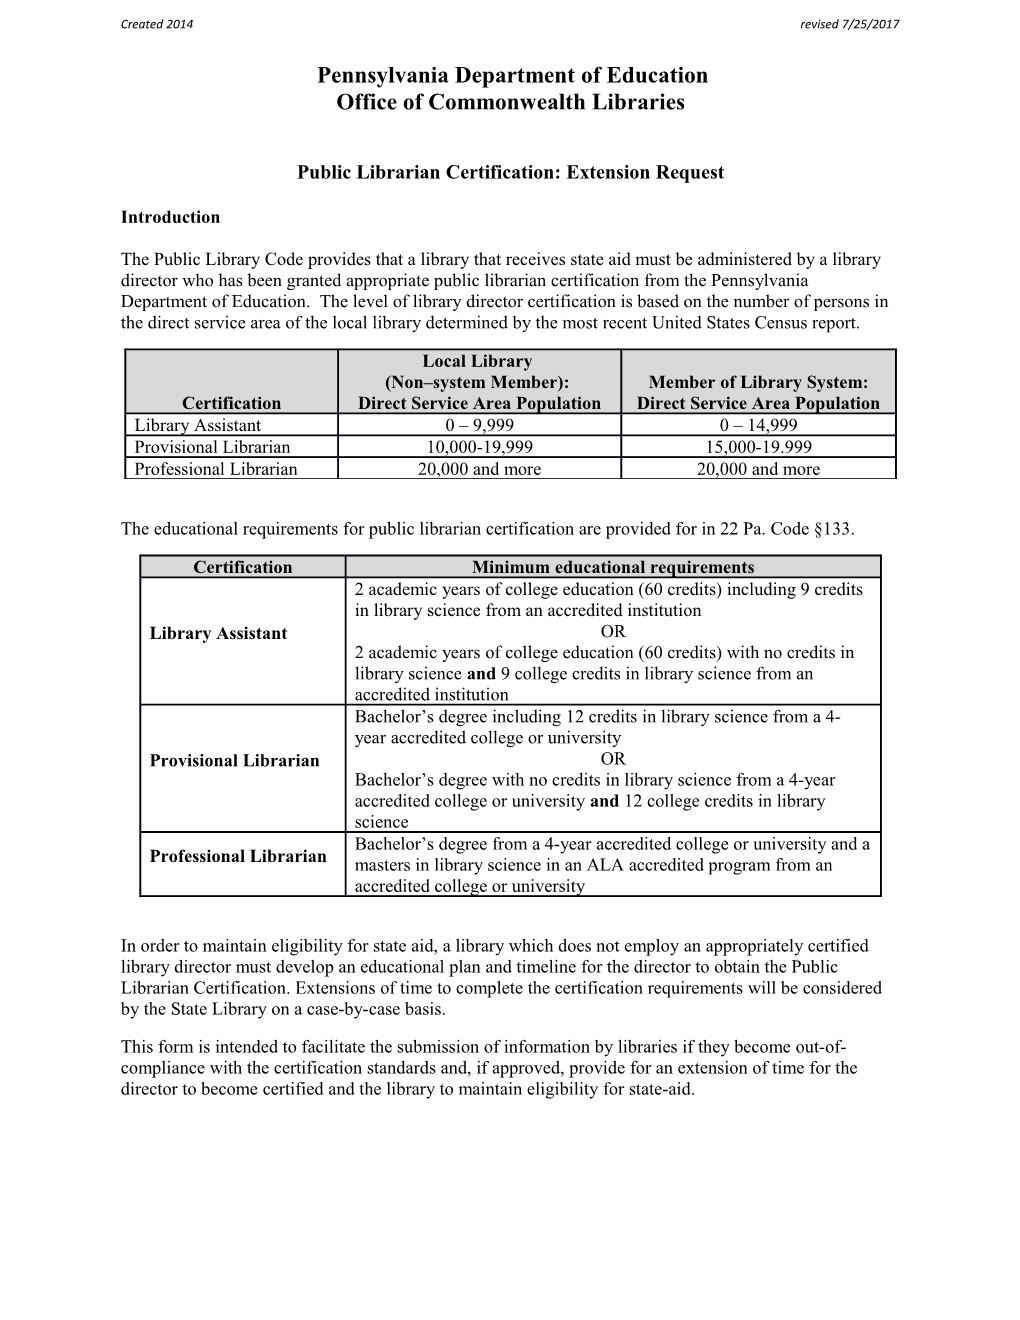 Public Librarian Certification: Extension Request